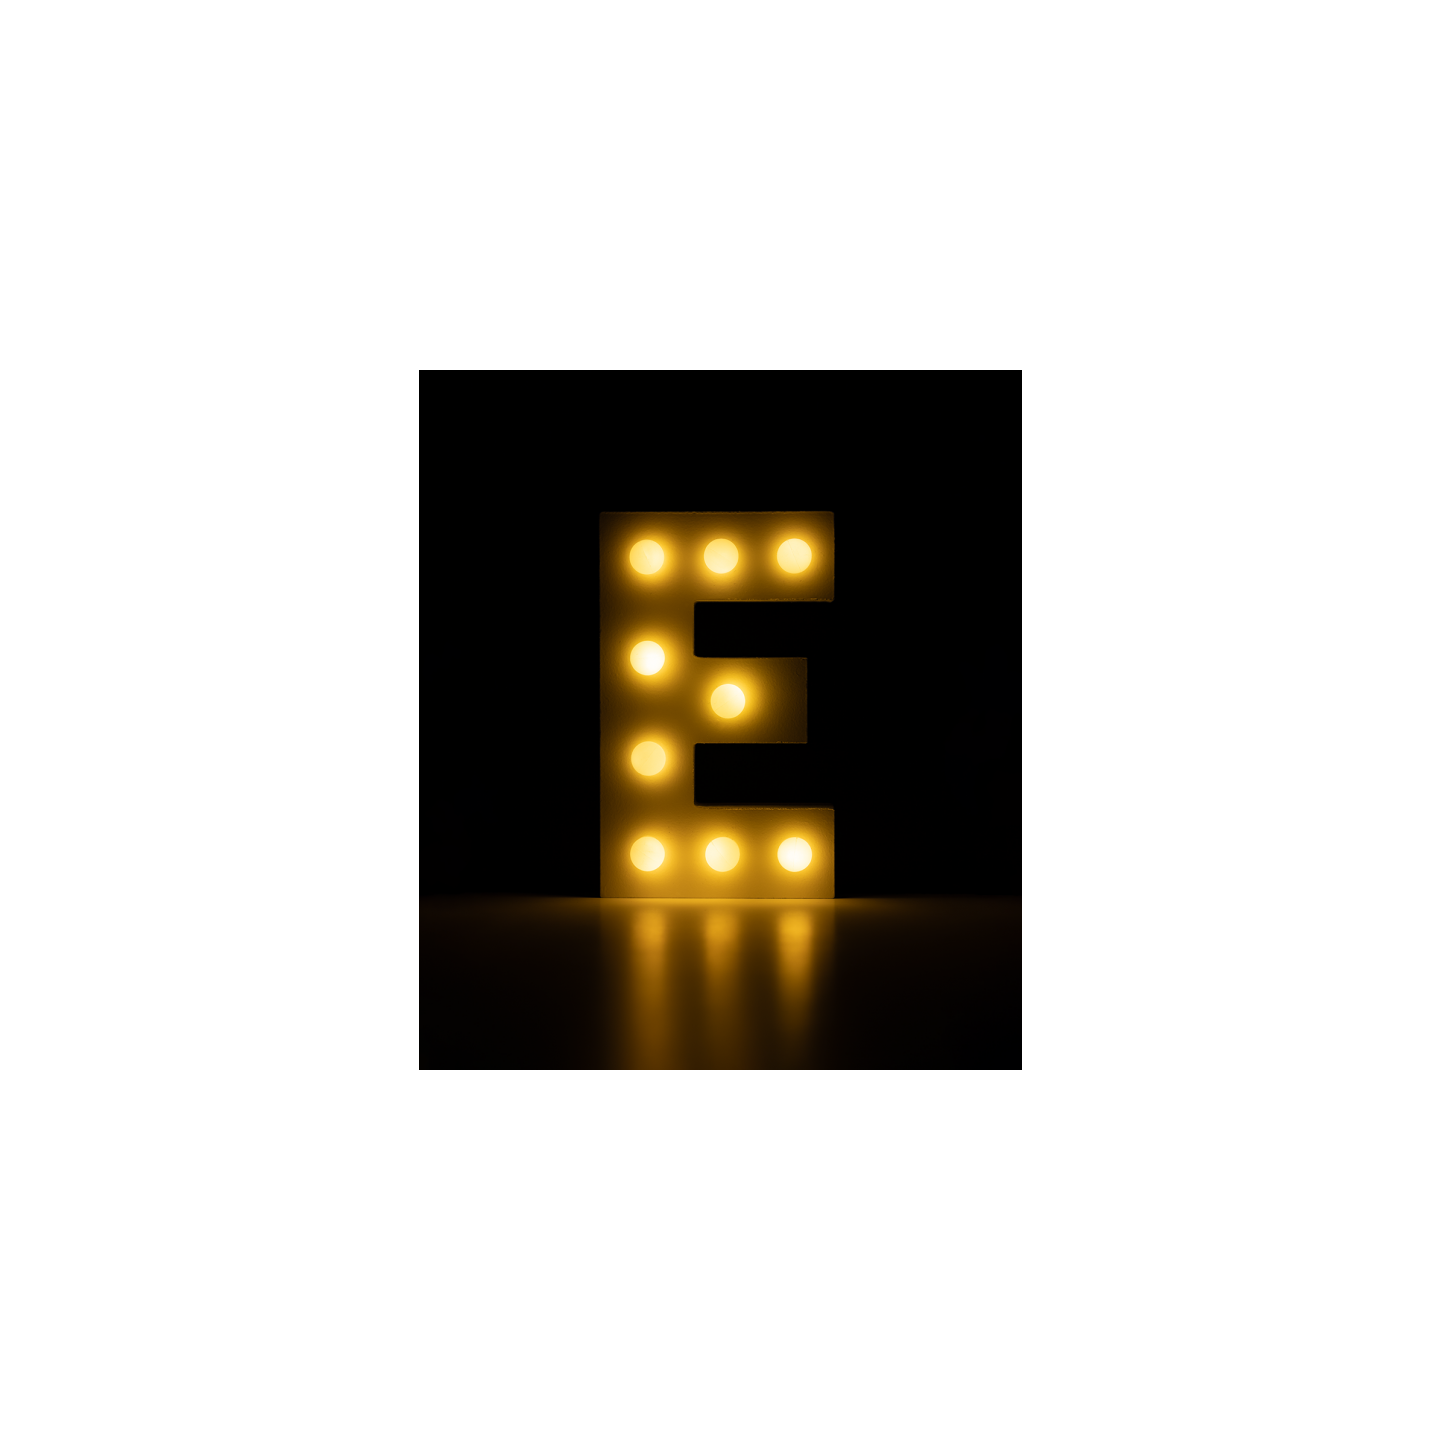 licht letter cijfer E